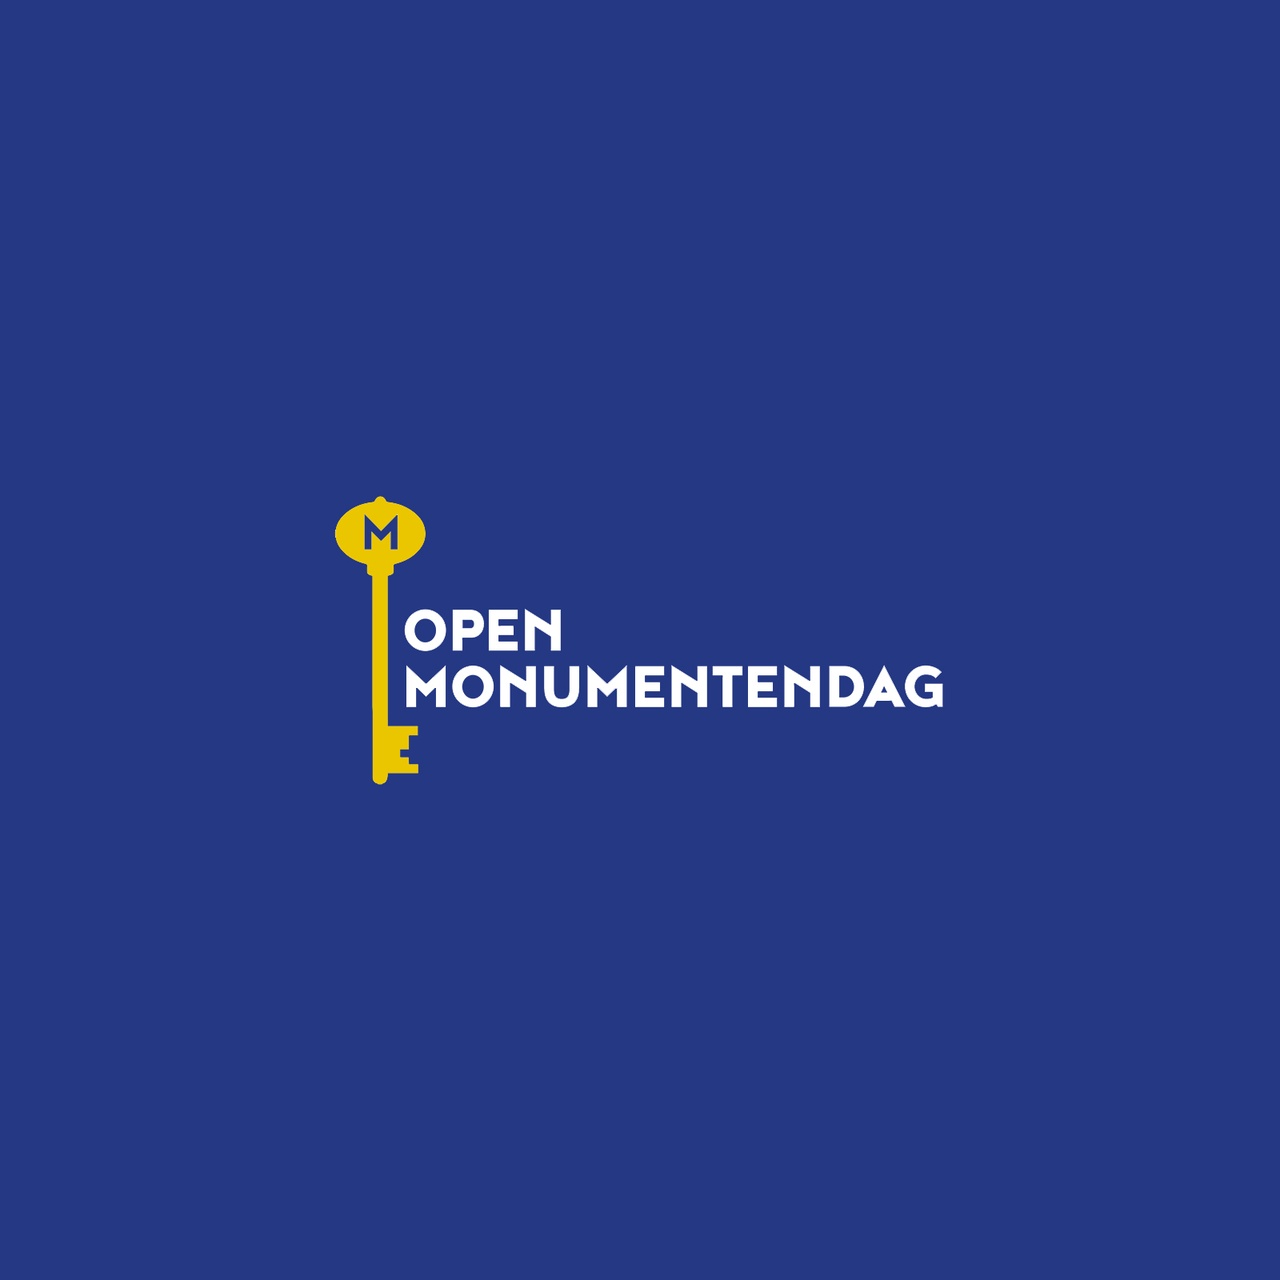 archiefroermond-logo-open-monumentendag.jpg